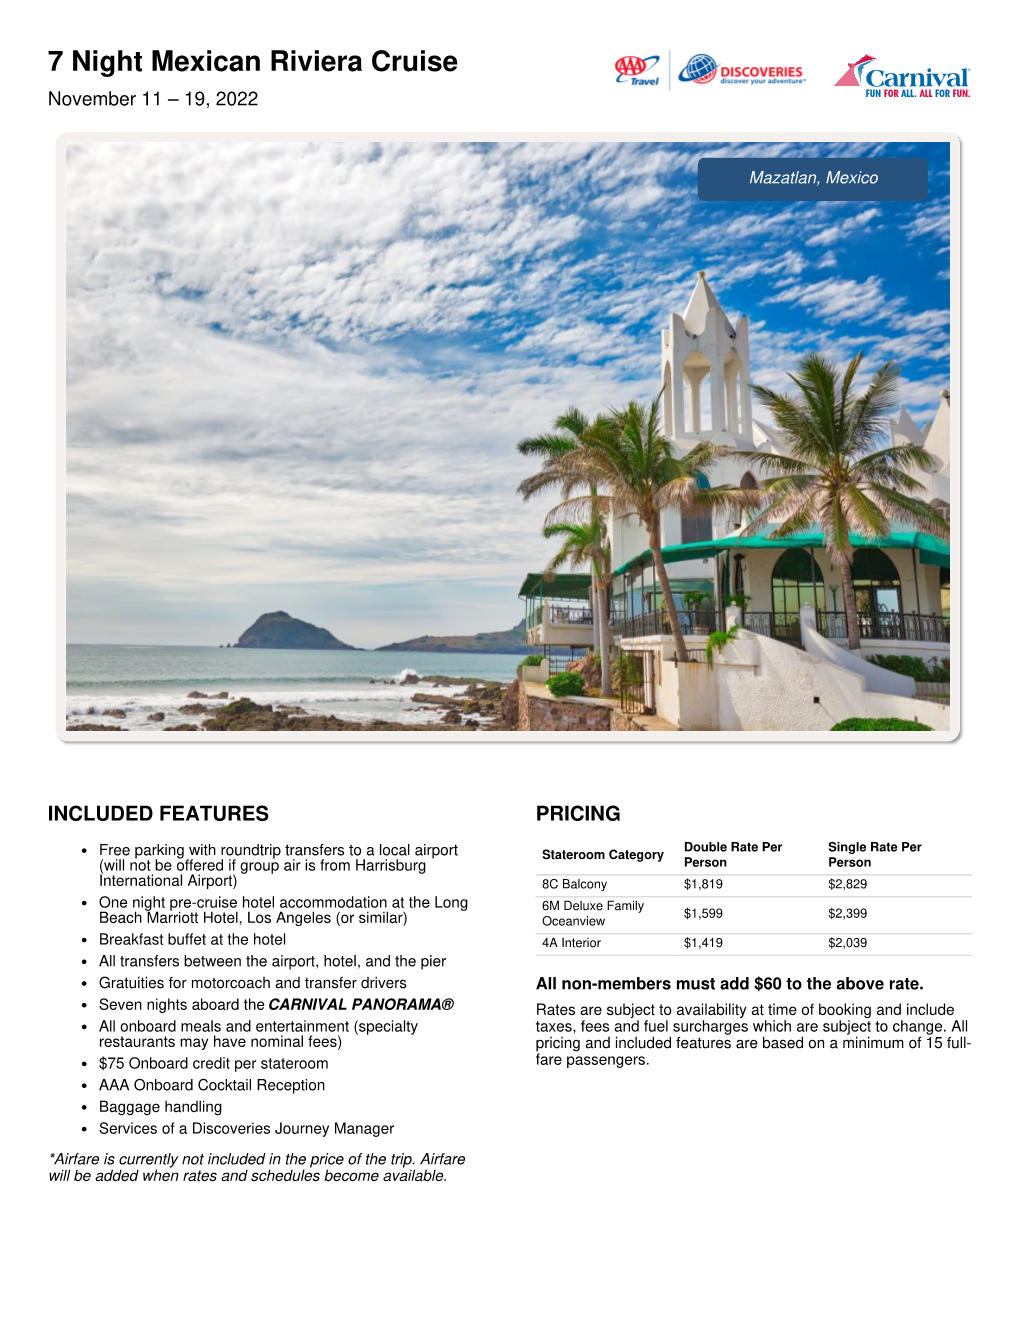 7 Night Mexican Riviera Cruise November 11 – 19, 2022